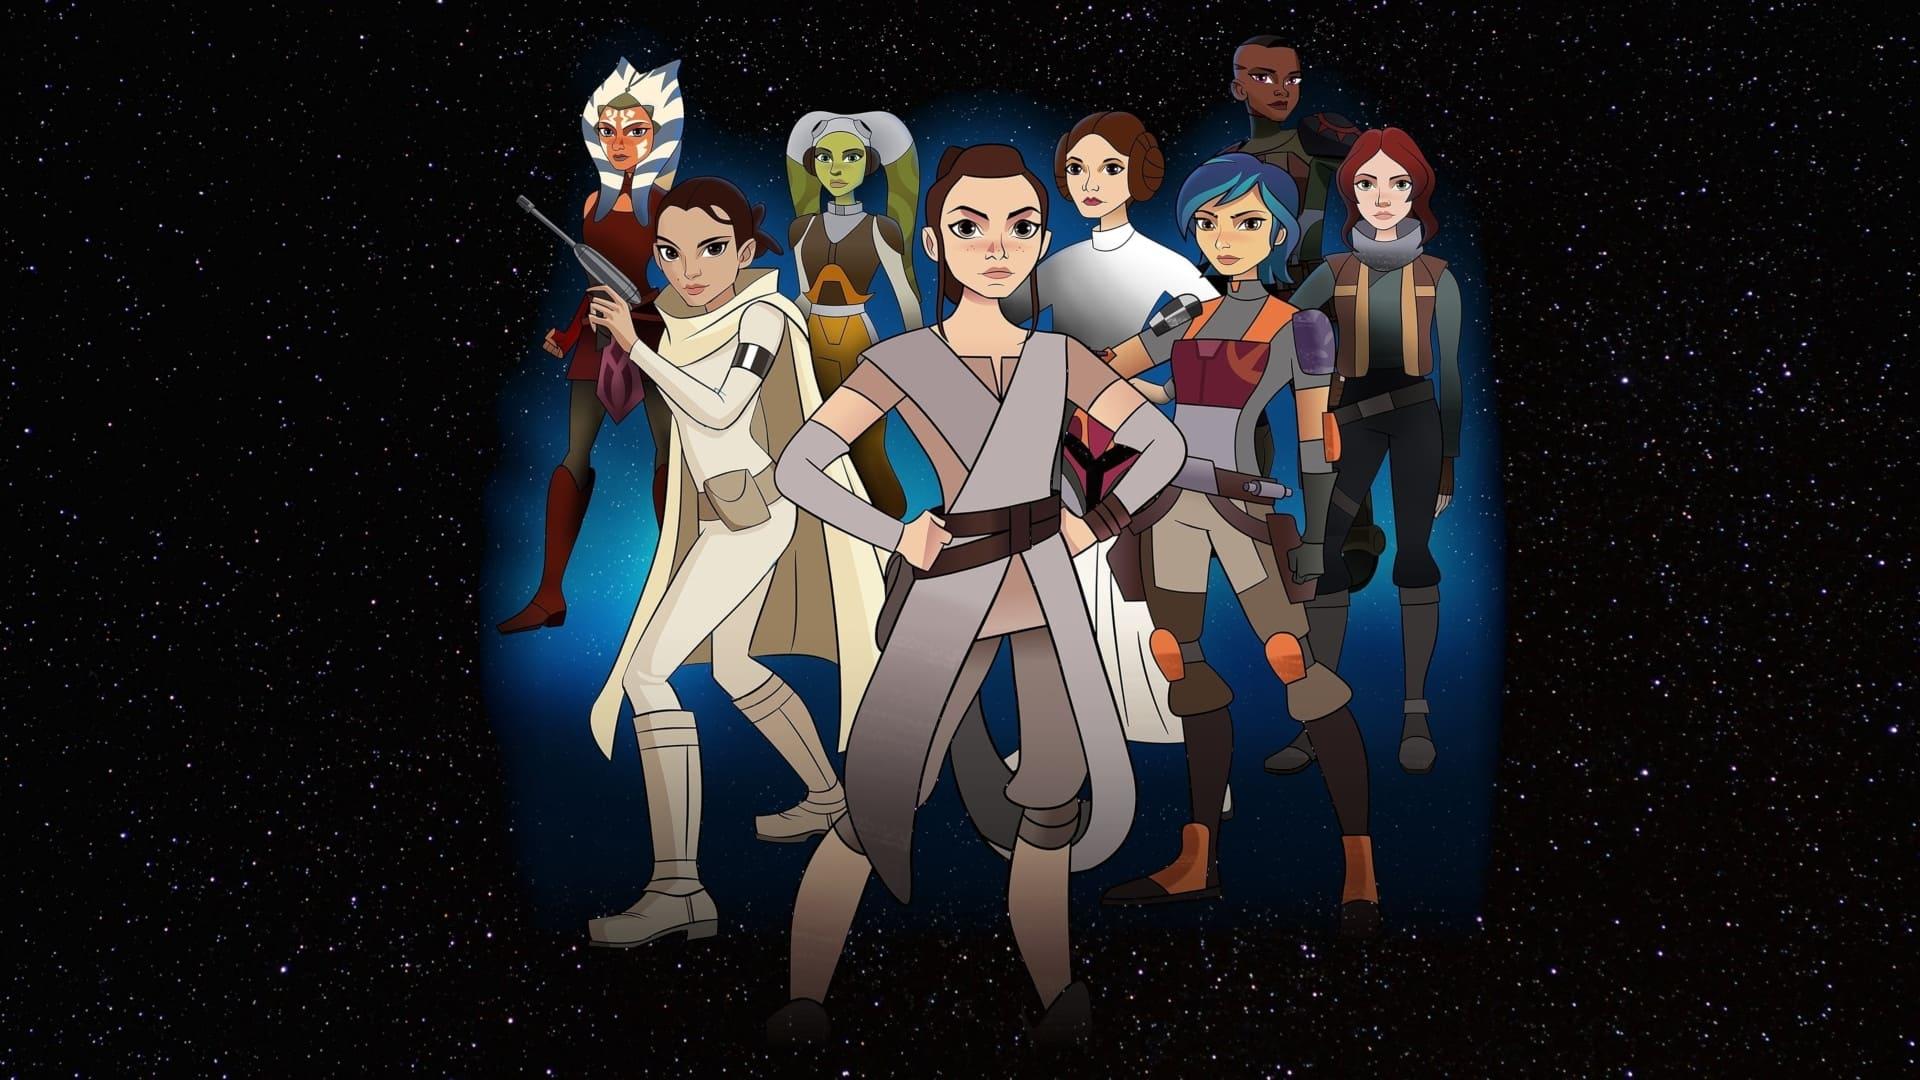 Star Wars: Forces of Destiny backdrop